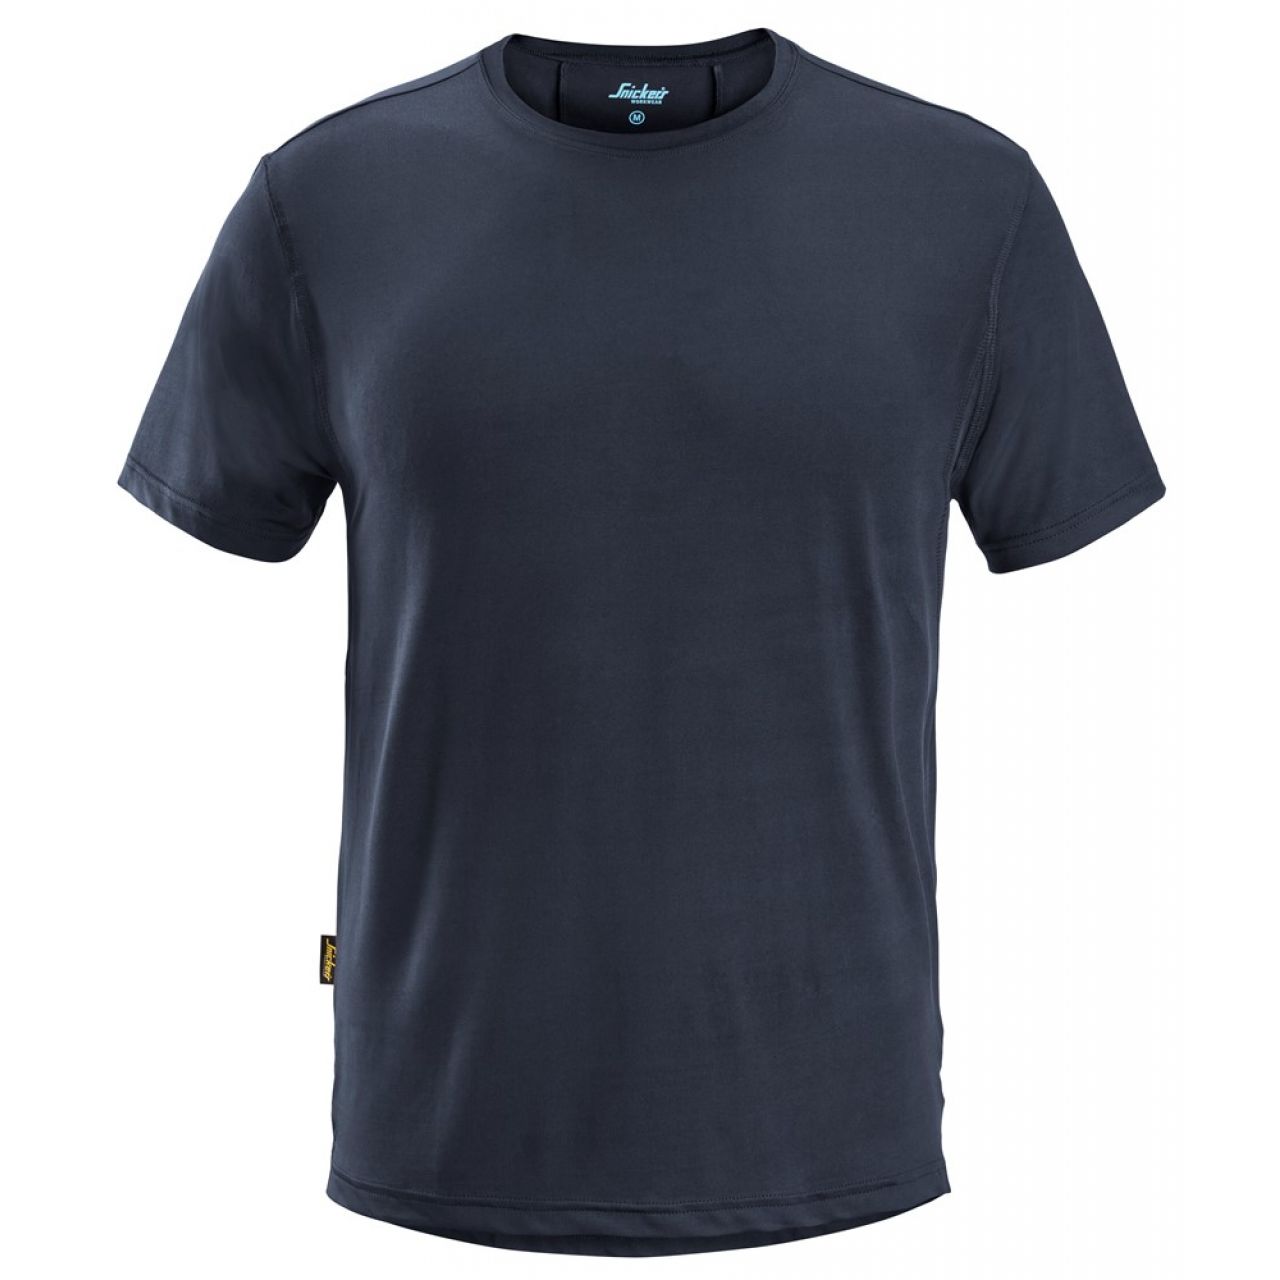 2511 Camiseta de manga corta LiteWork azul marino talla XXL